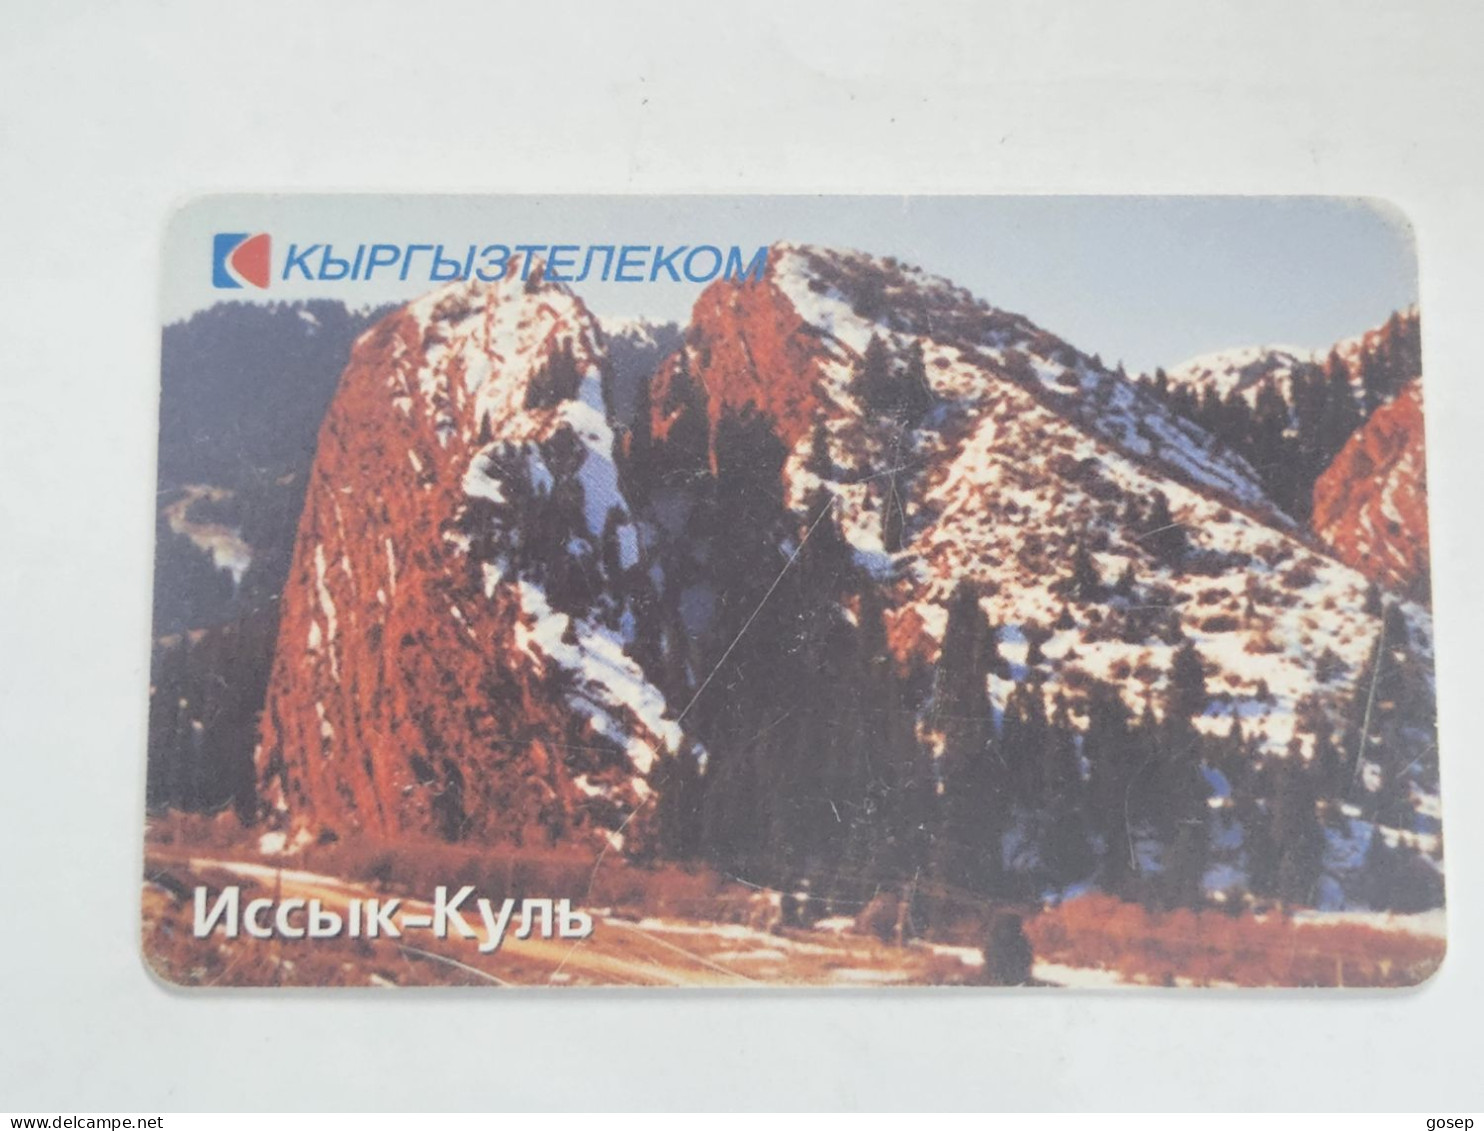 KYRGYZSTAN-(KG-KYR-0016)-lake Lssyk-kul3-(41)-(50units)-(00459719)-(tirage-10.000)-used Card+1card Prepiad Free - Kirghizistan